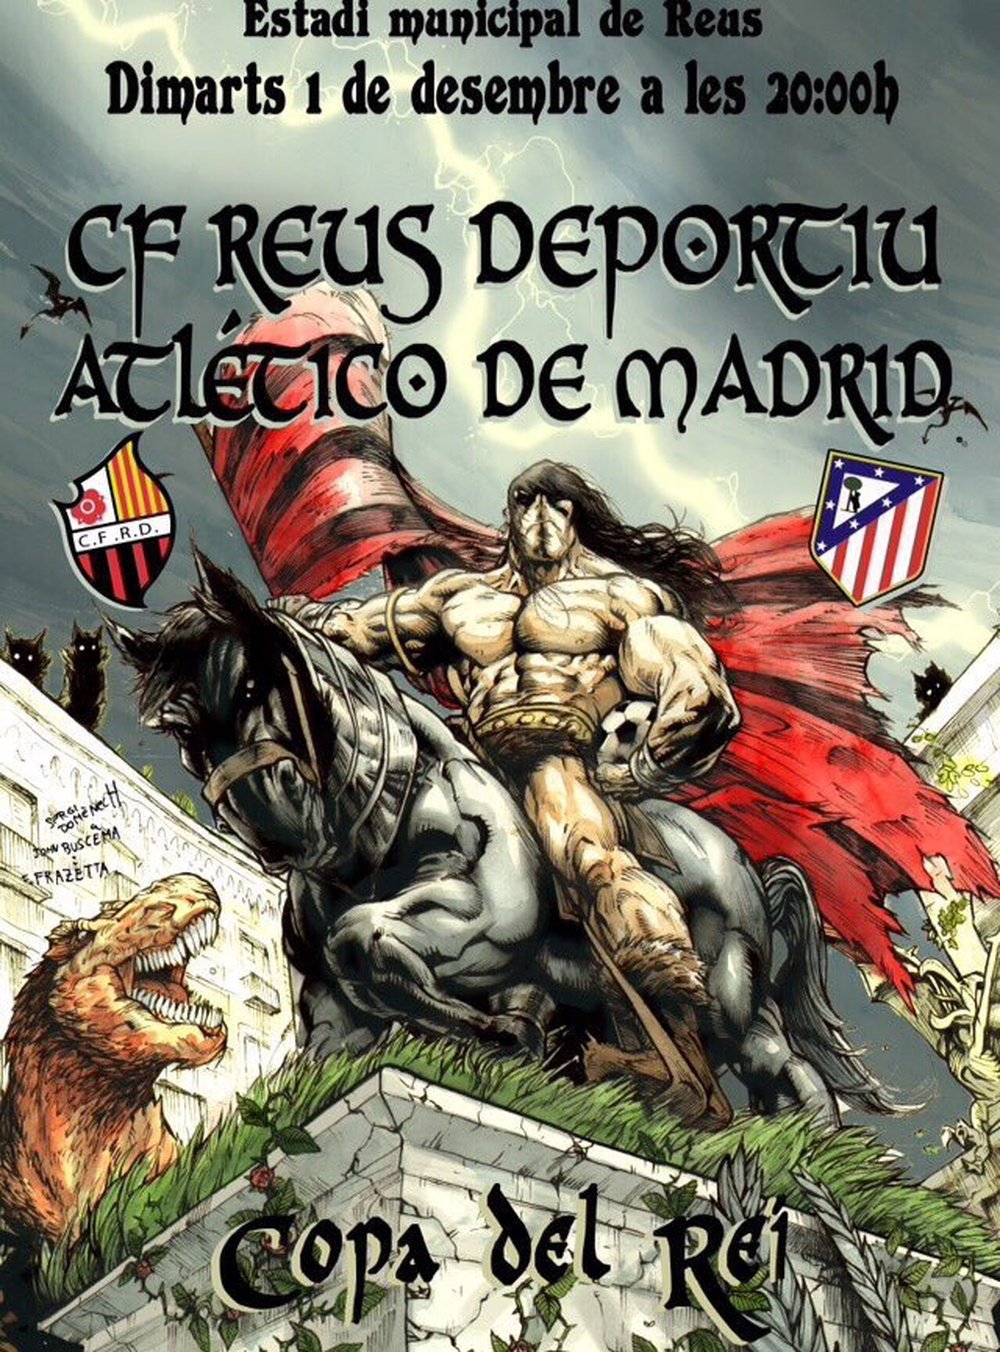 Imagen promocional del Reus-Atlético. Twitter